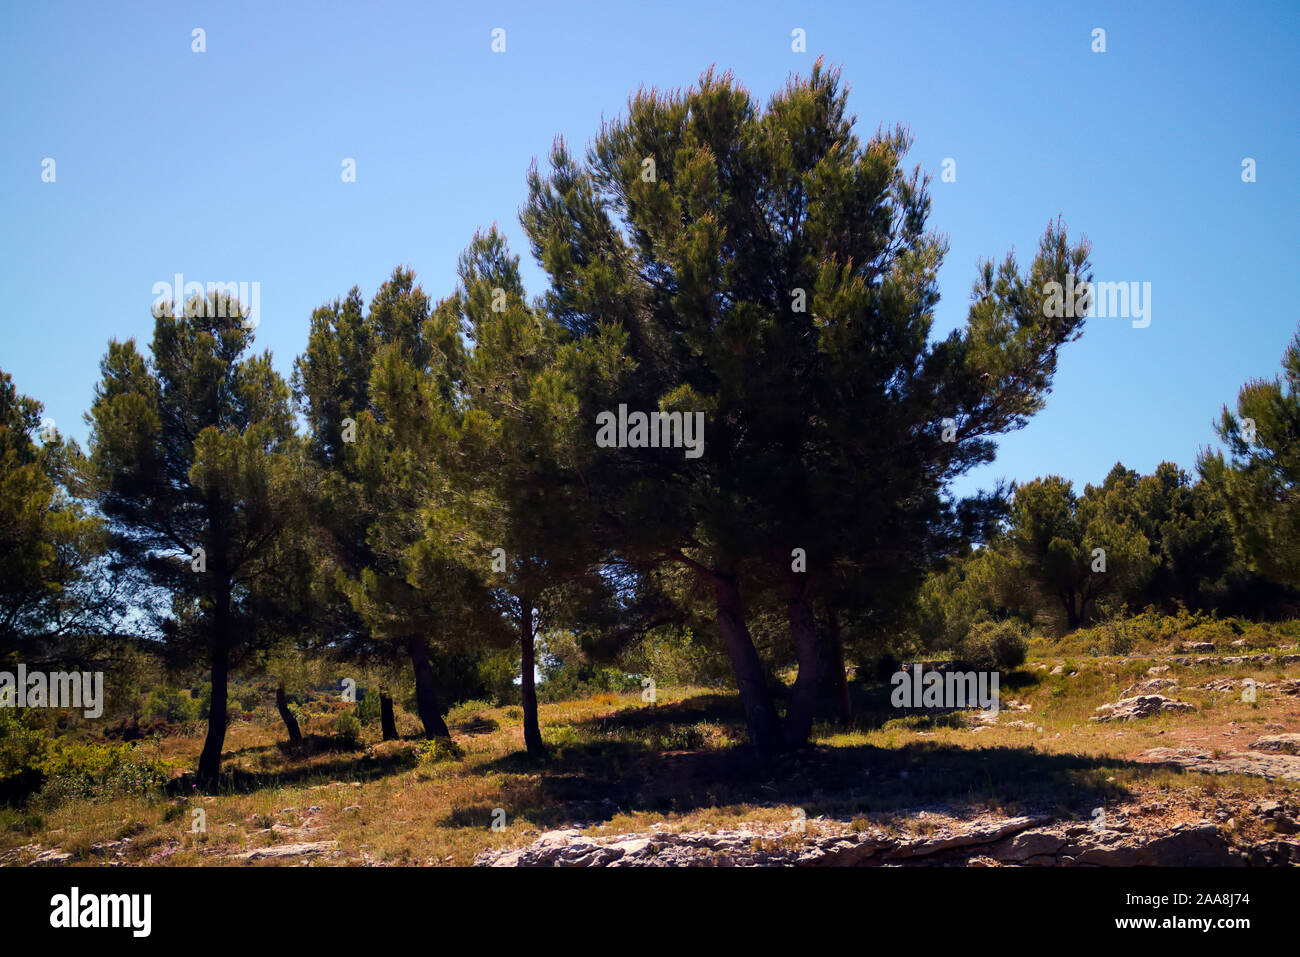 Umbrella or Stone Pine Pinus pinea in typical coastal Mediterranean garrigue habitat Stock Photo